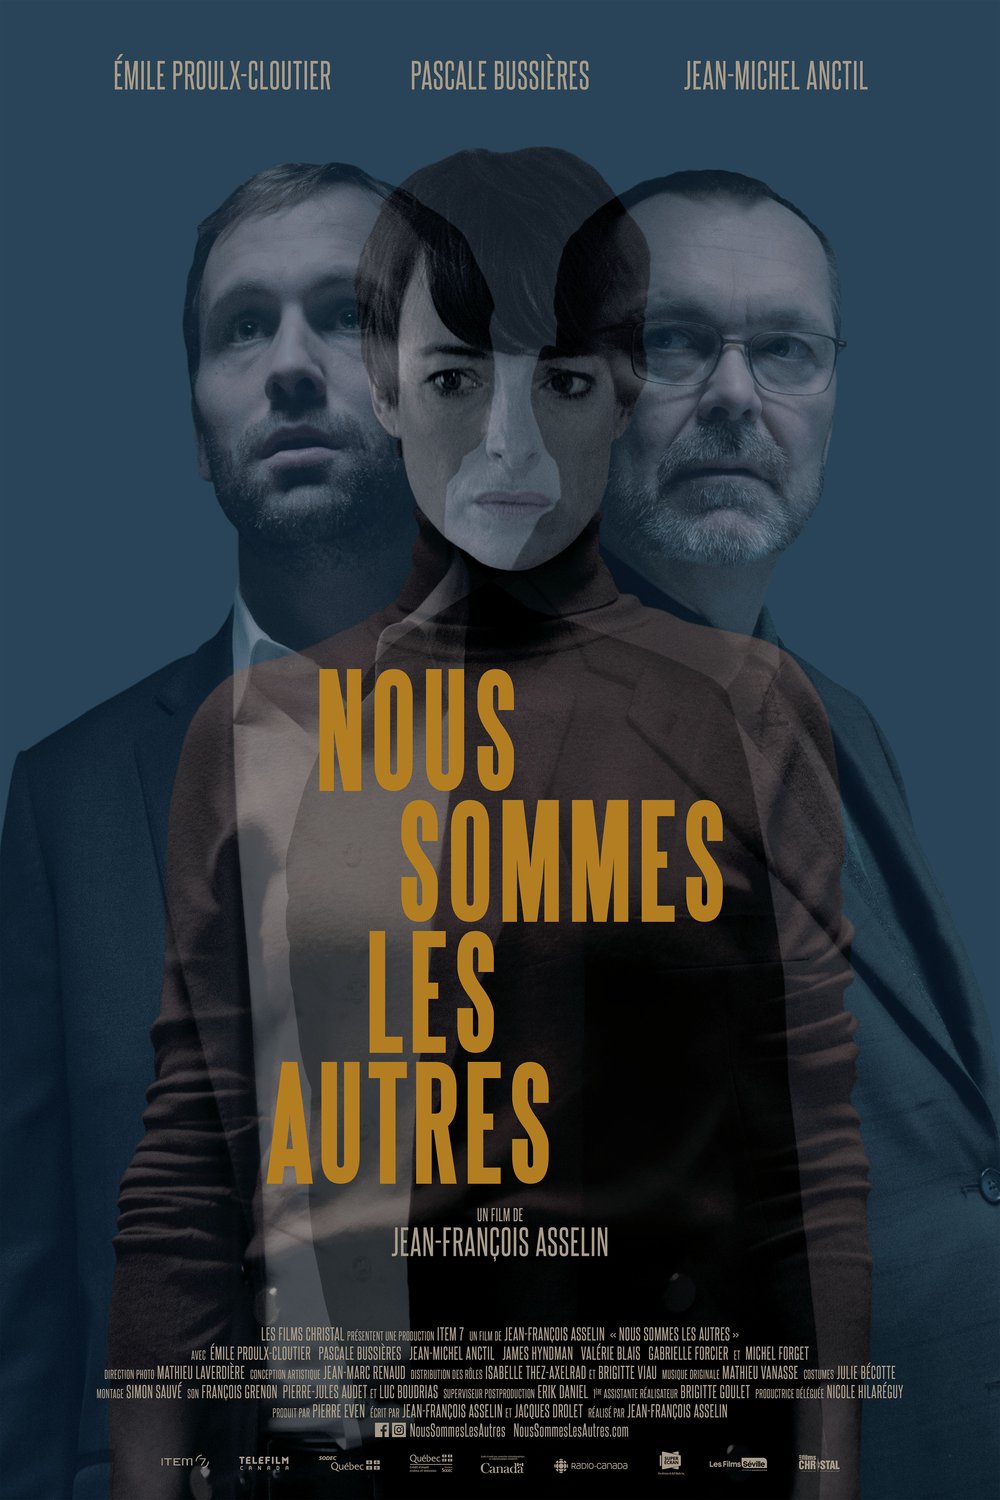 Poster of the movie Nous sommes les autres